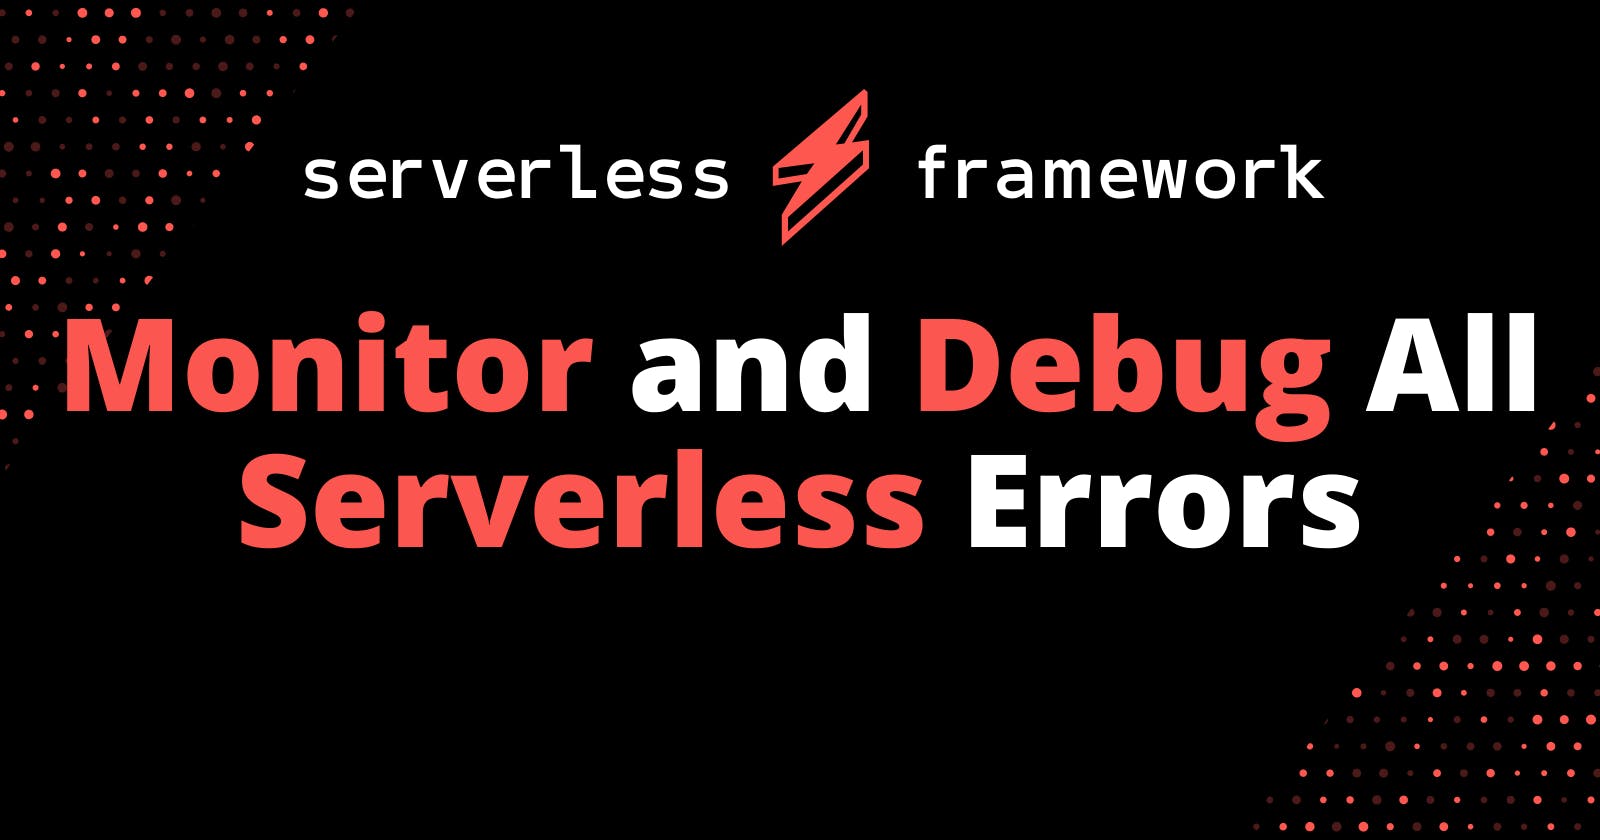 Monitor and debug all serverless errors